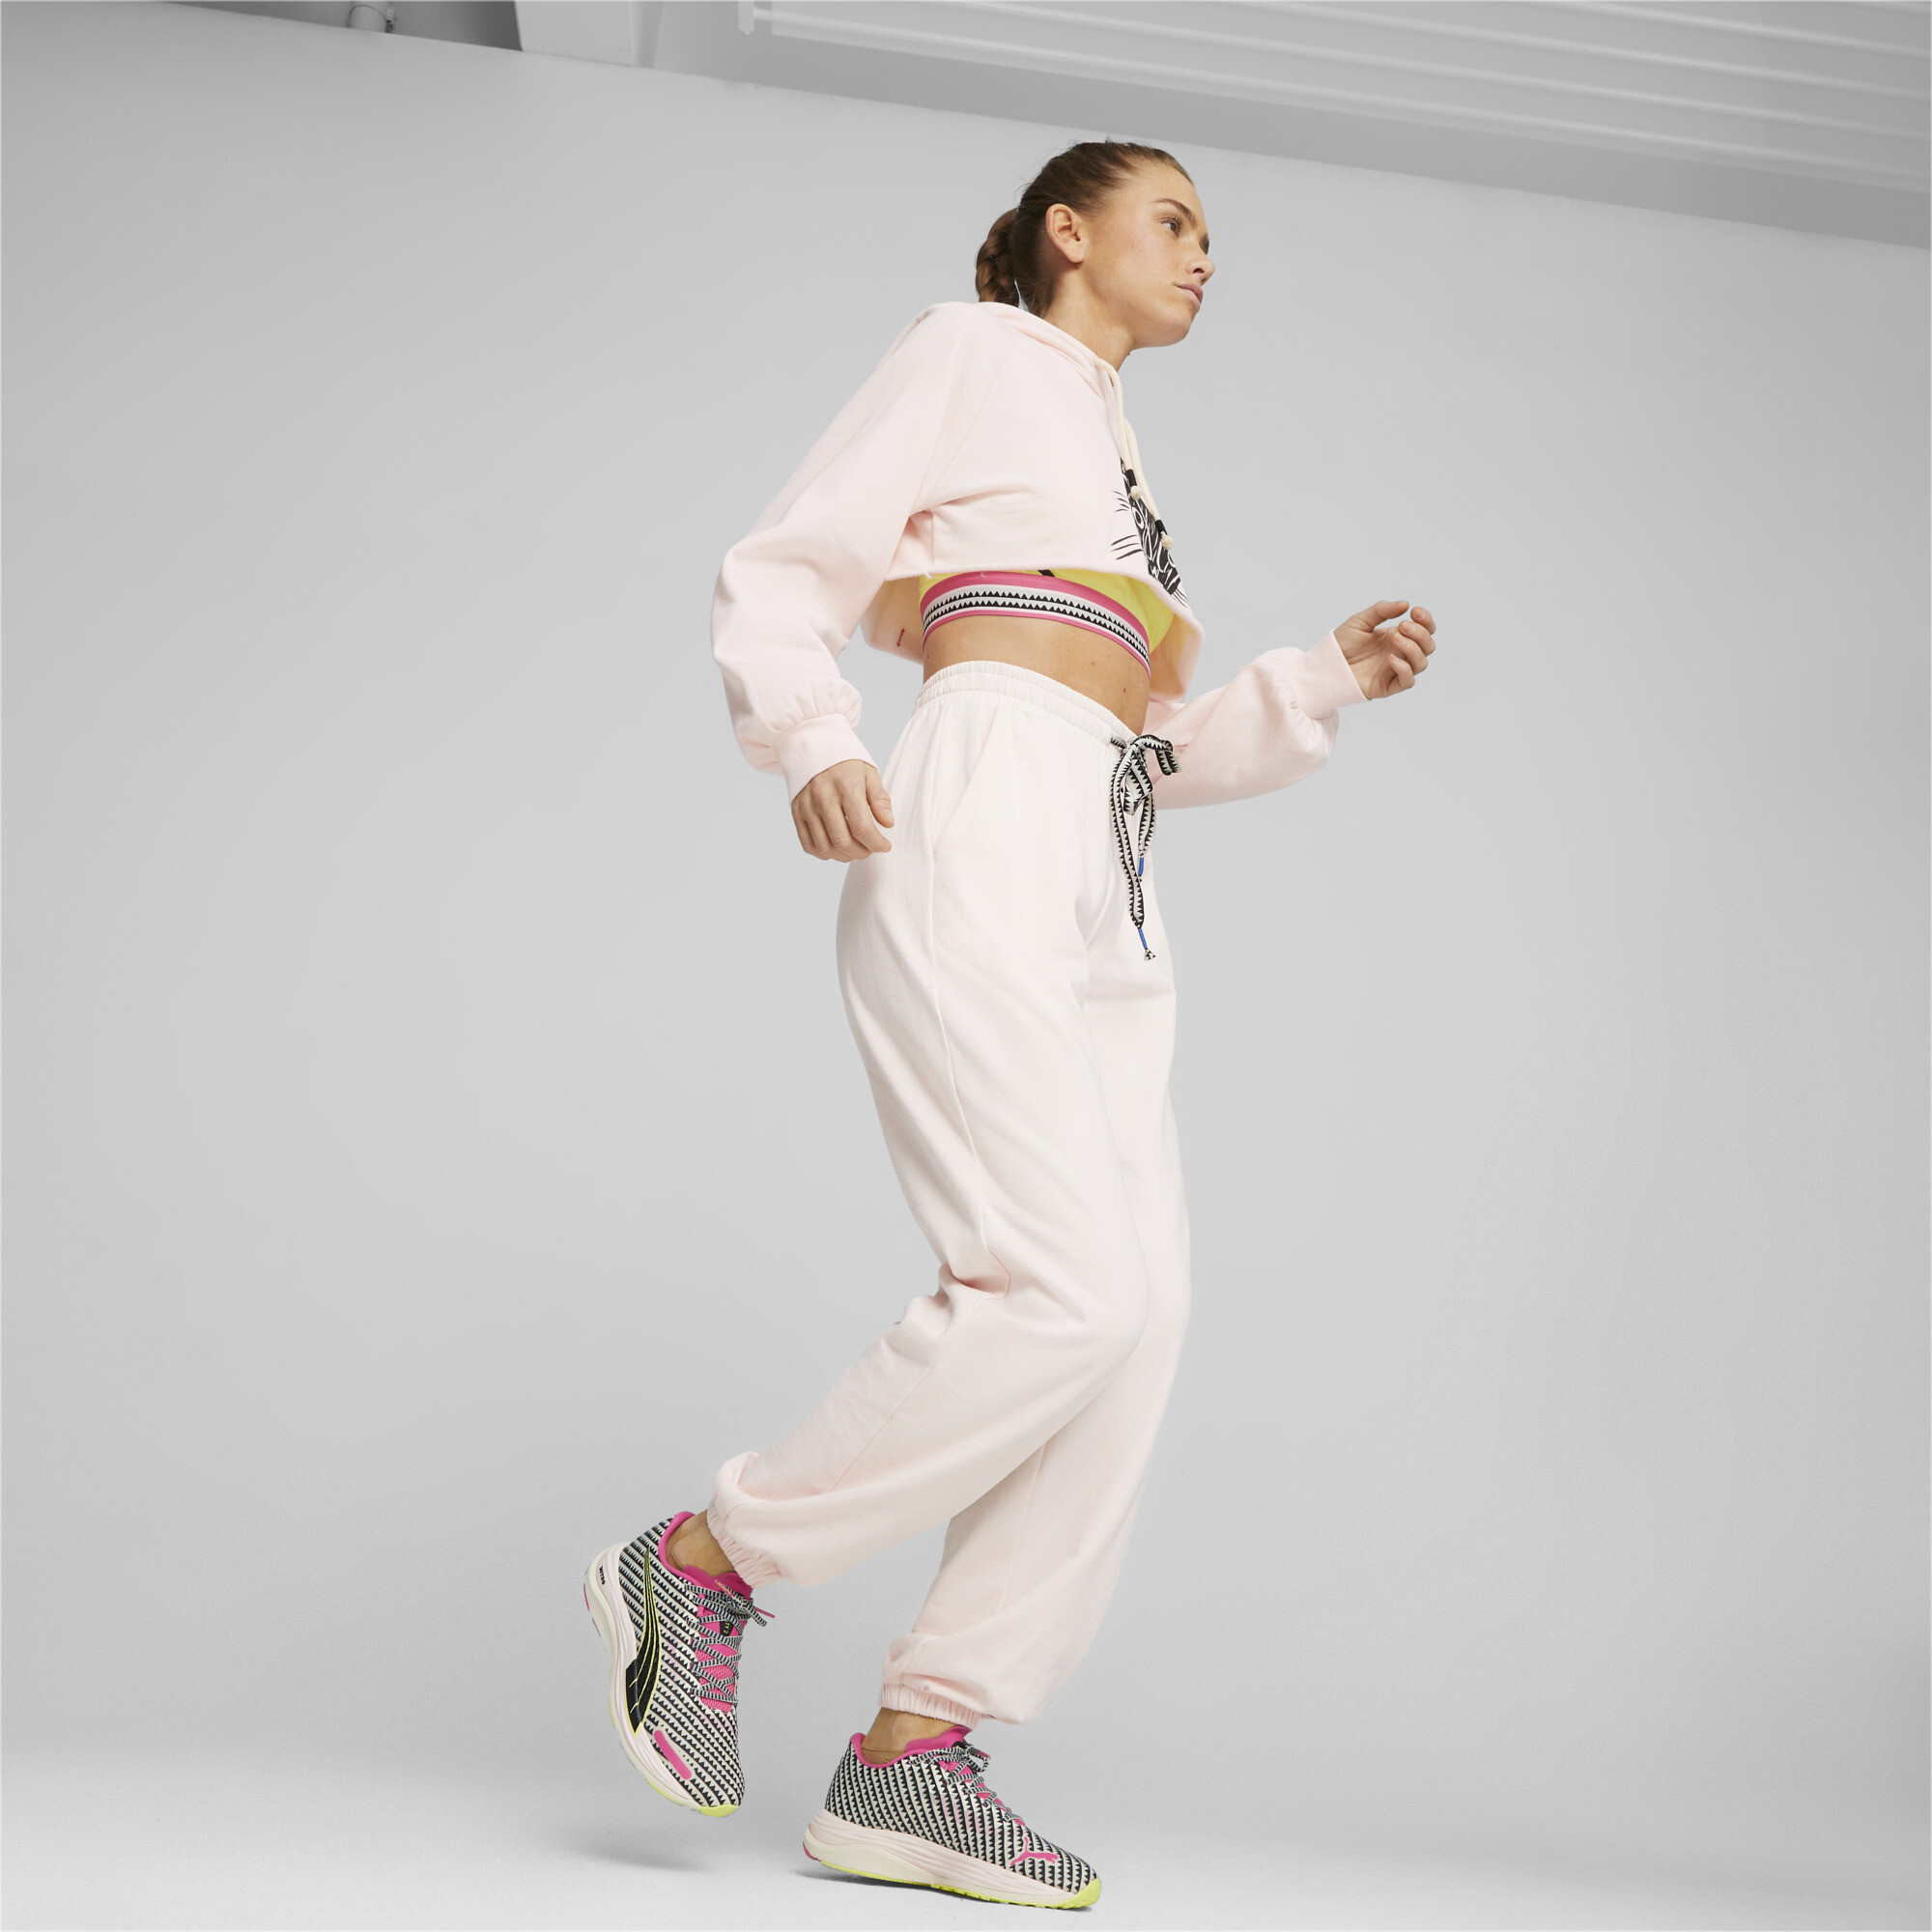 Women's PUMA X Lemlem Velocity NITRO 2 Running Shoes Women In Beige, Size EU 37